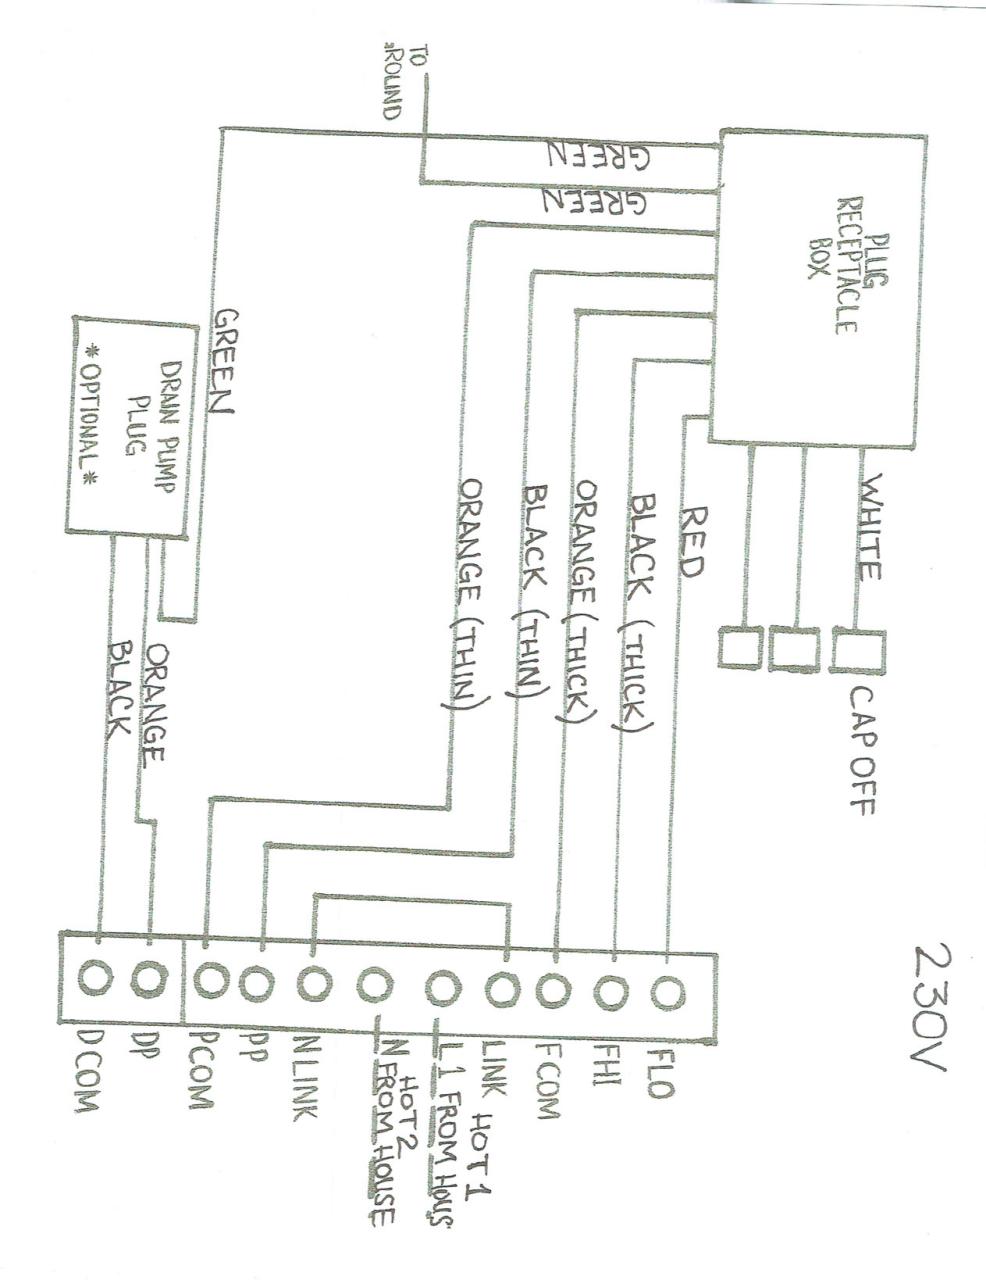 Kicker 11Hs8 Wiring Diagram